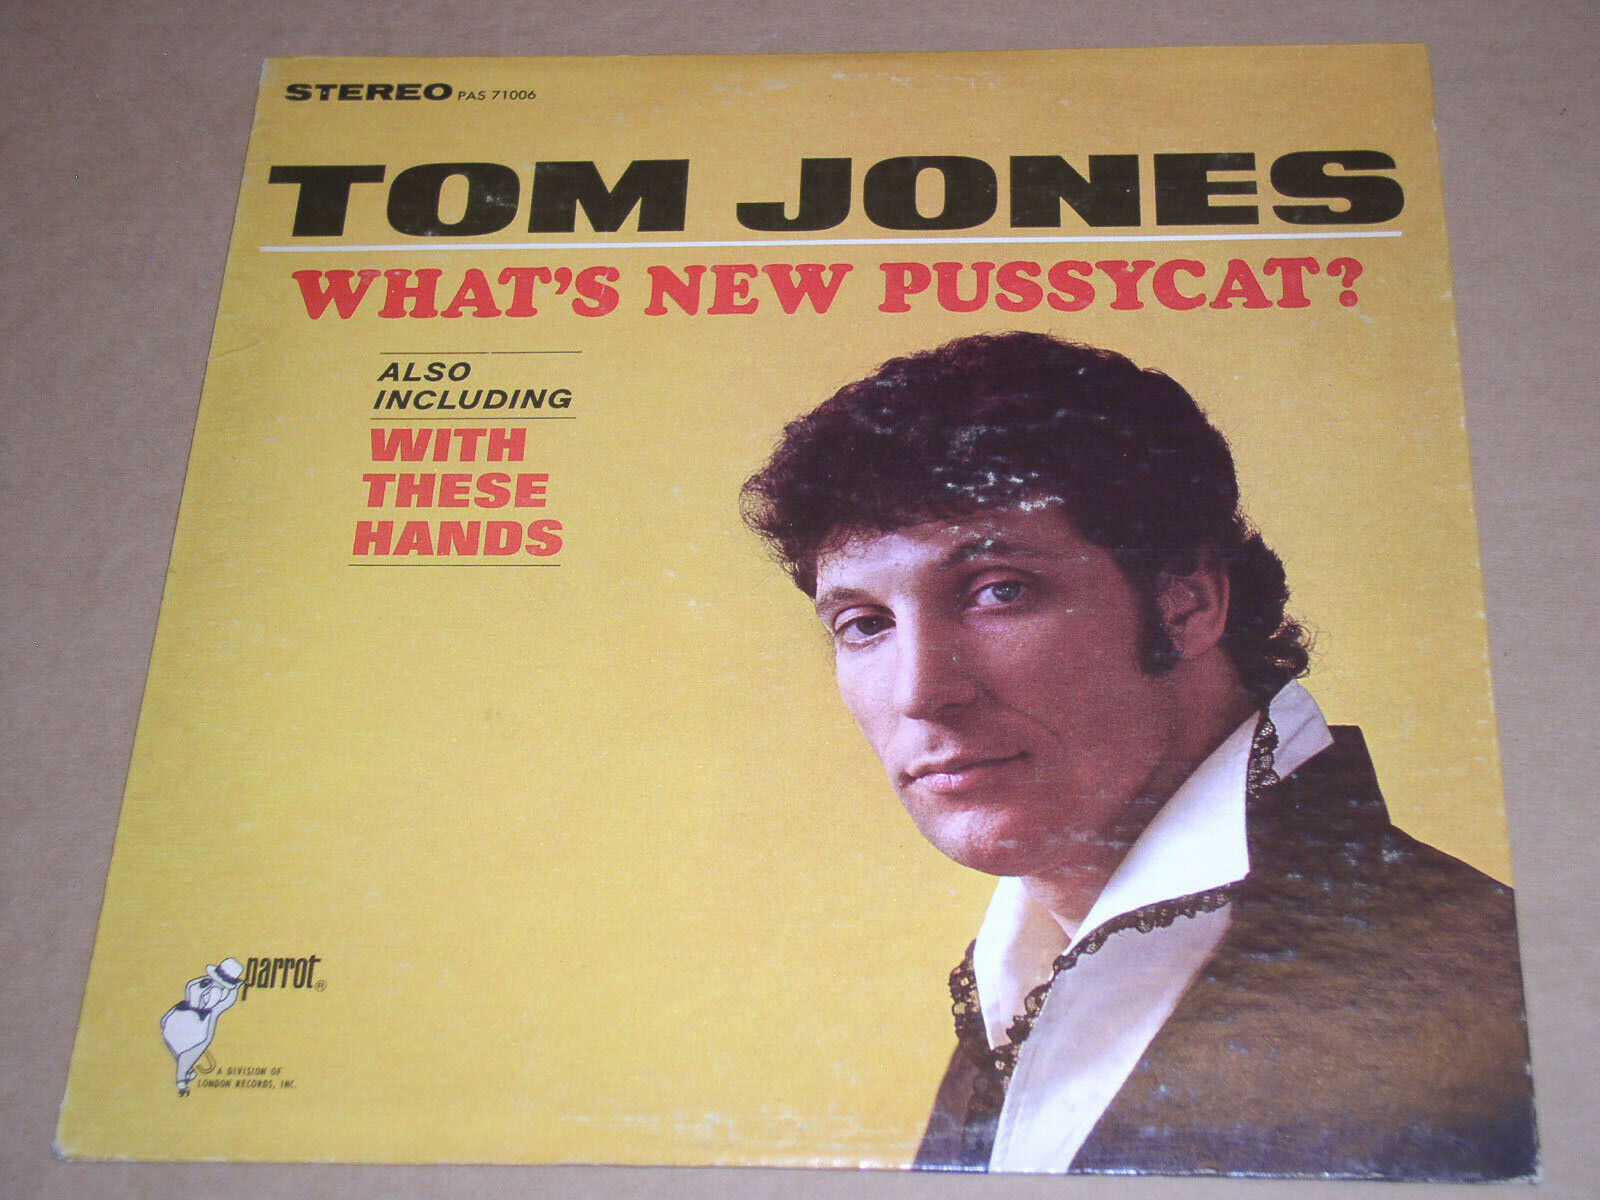 Tom Jones Whats New Pussycat Vinyl Record Album Vintage Parrot Label Vinyl Records 3989